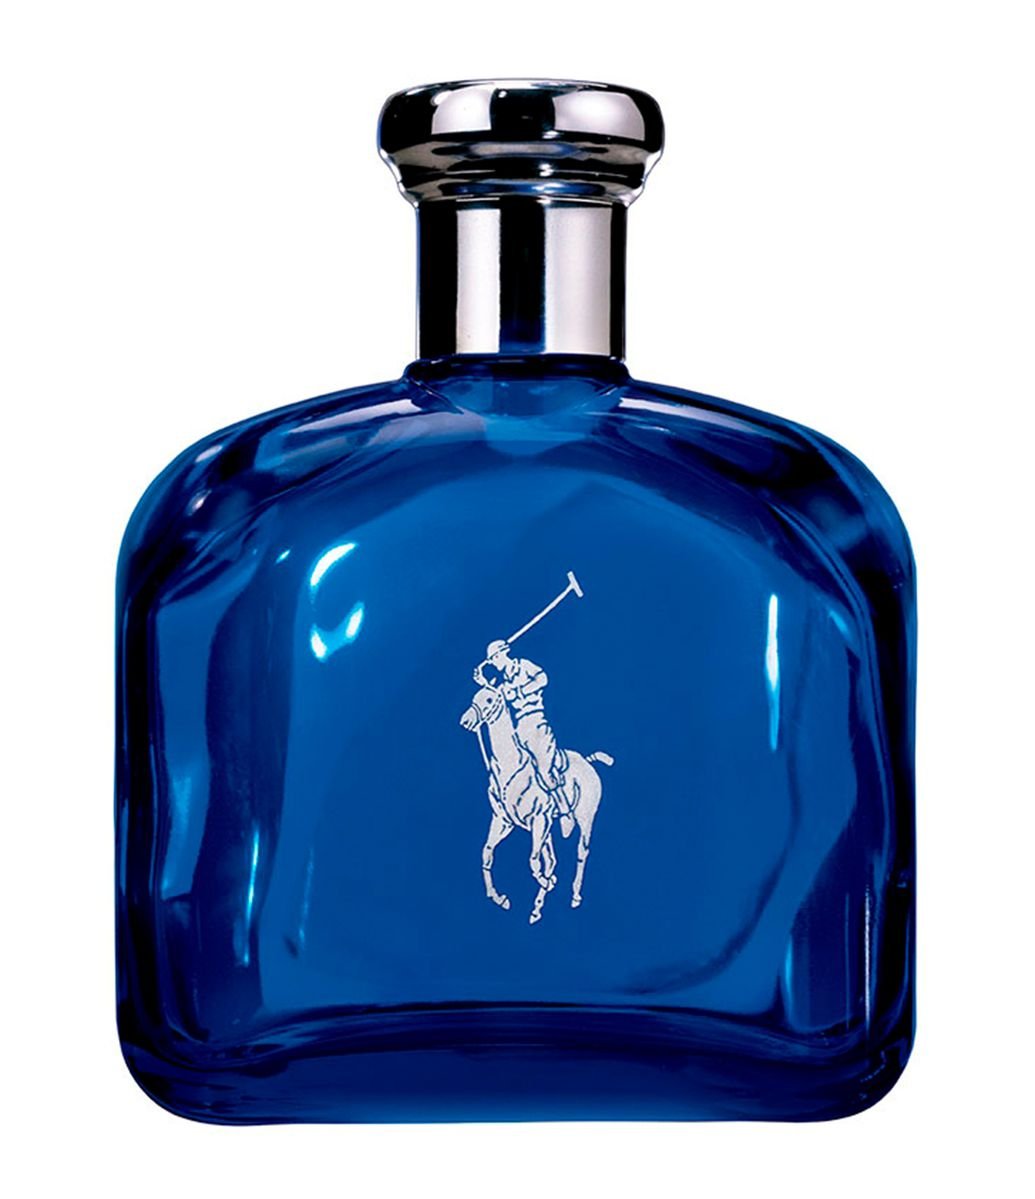 perfume polo blue